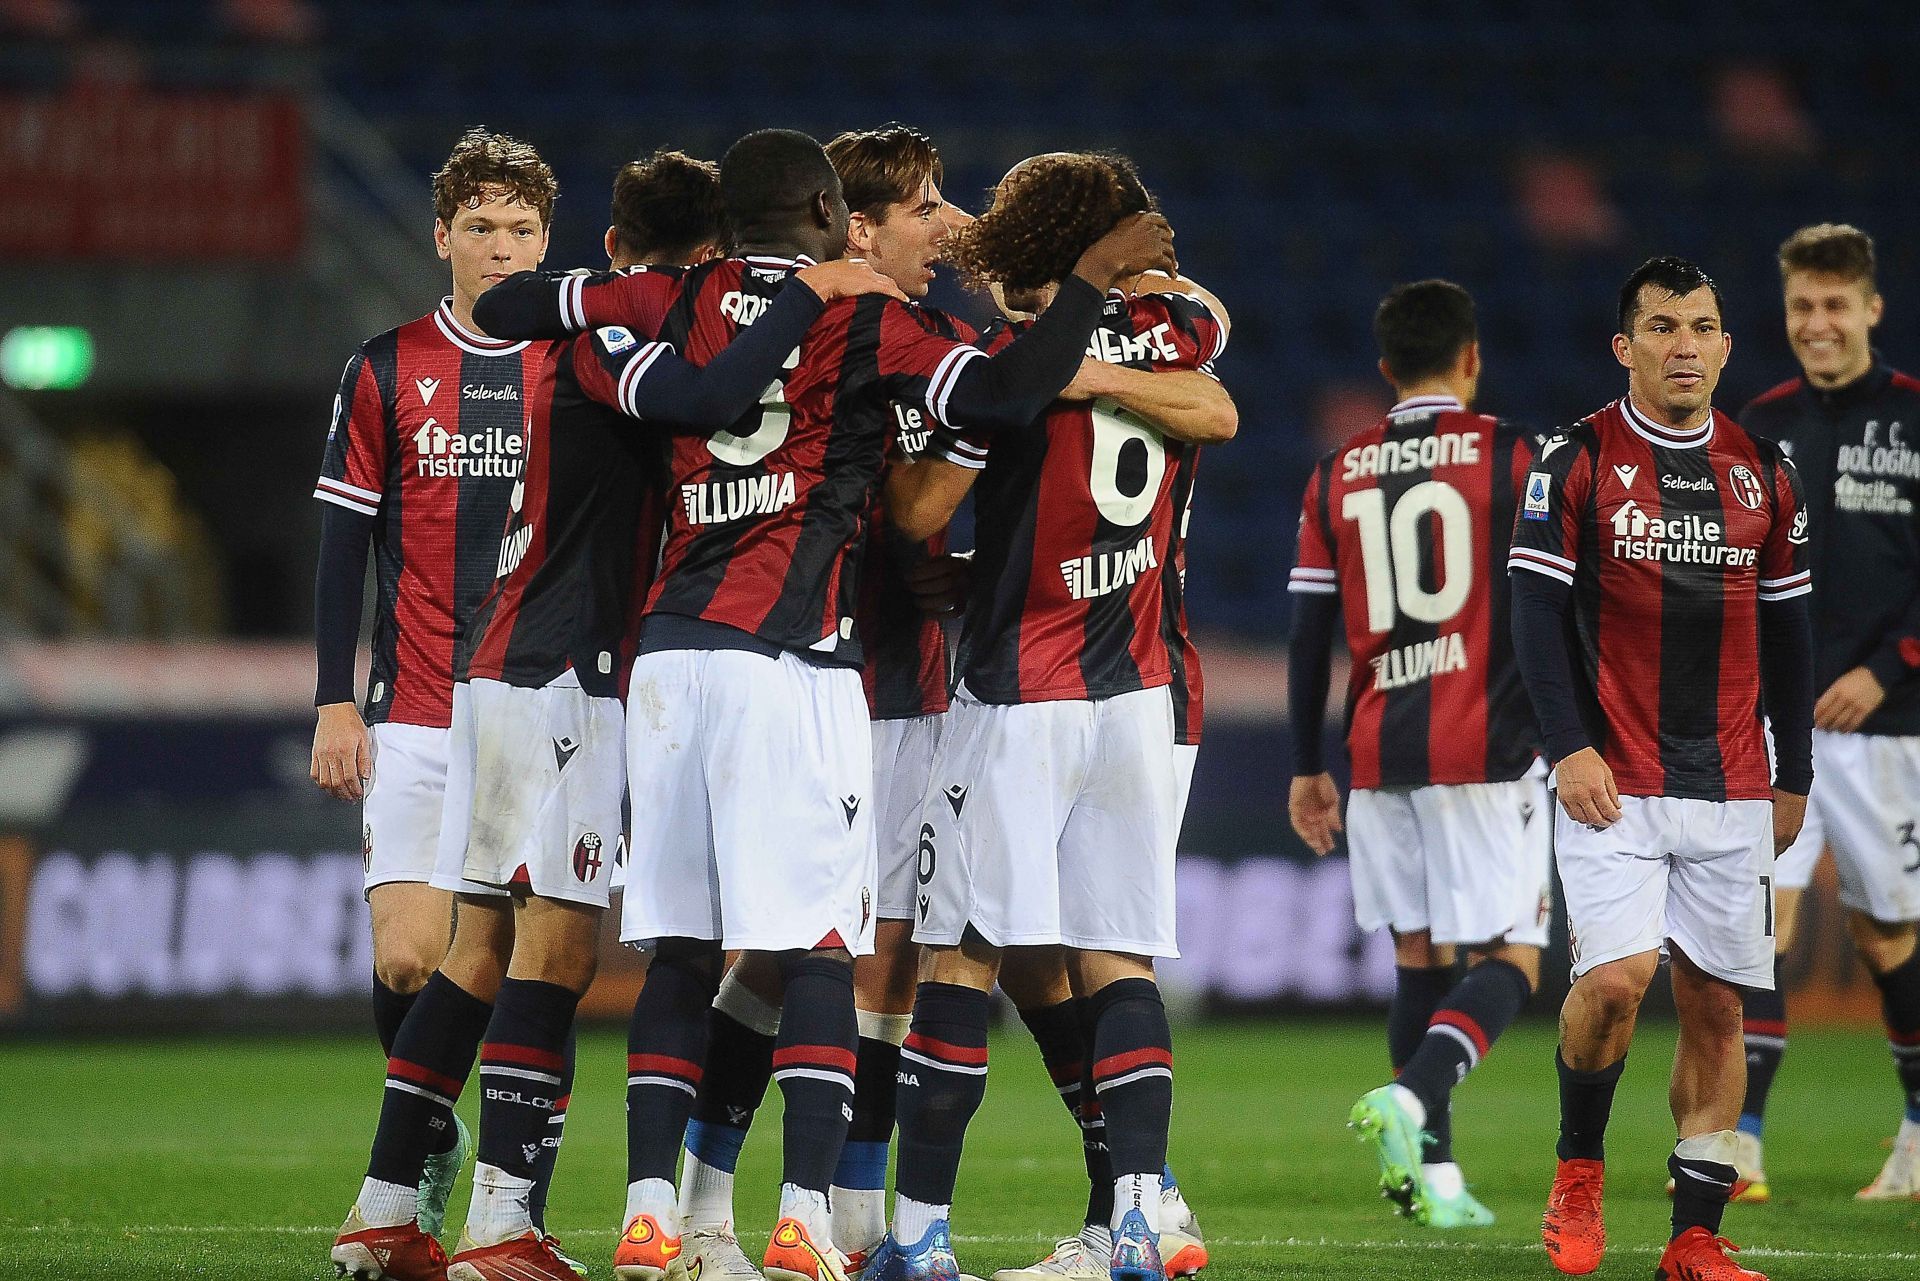 Bologna FC will face Sampdoria on Sunday - Serie A